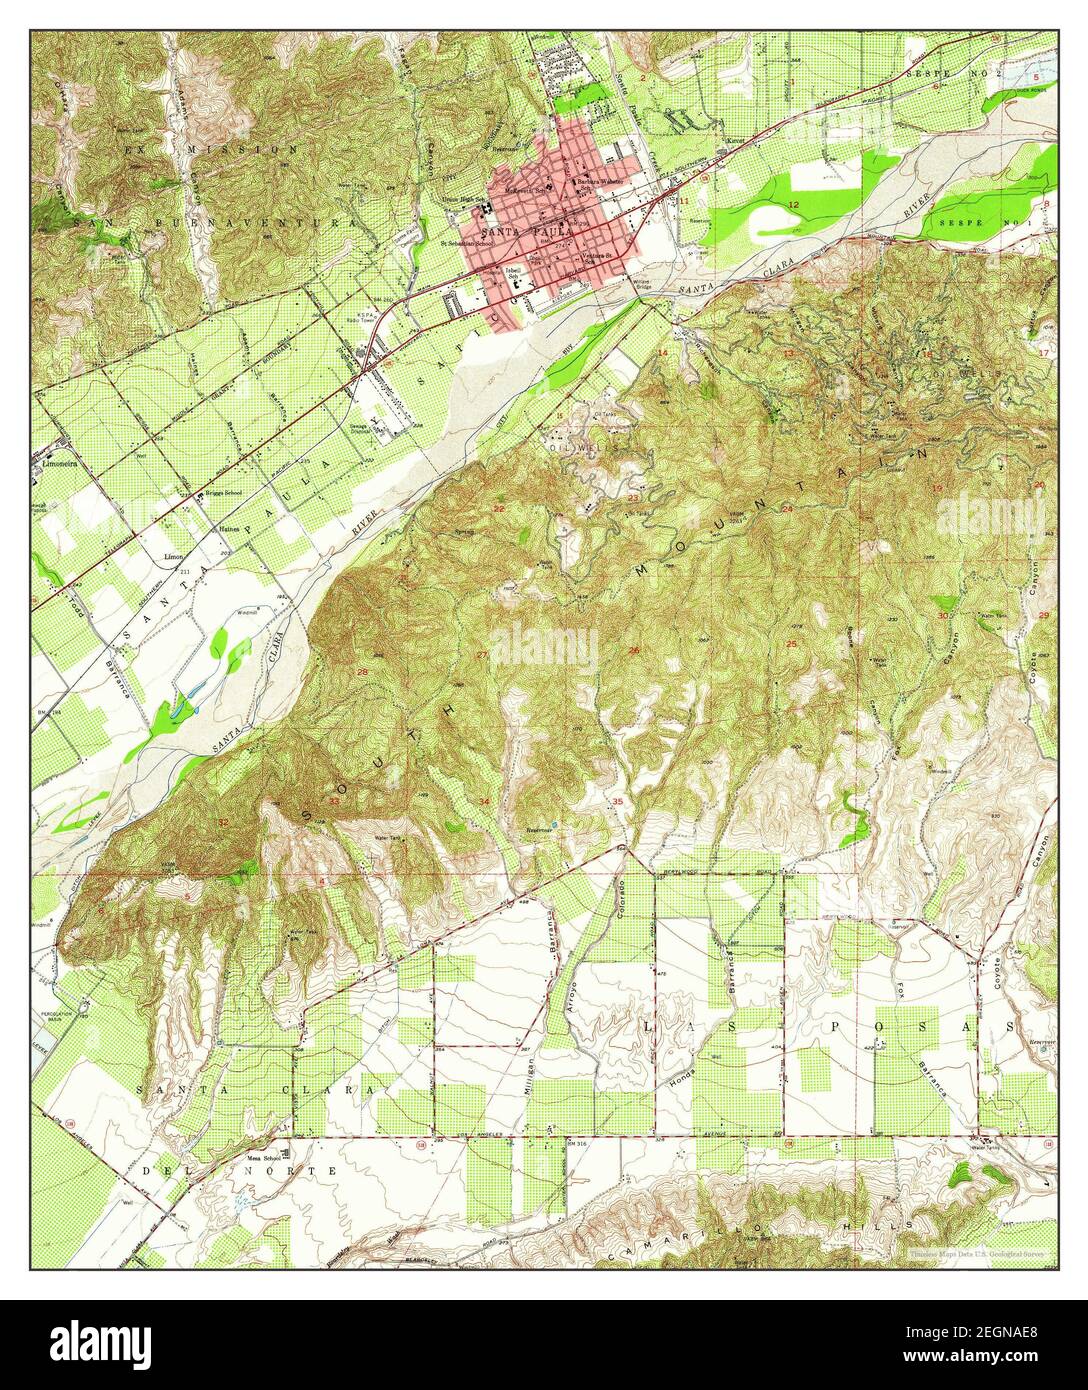 Santa Paula, California, map 1951, 1:24000, United States of America by Timeless Maps, data U.S. Geological Survey Stock Photo